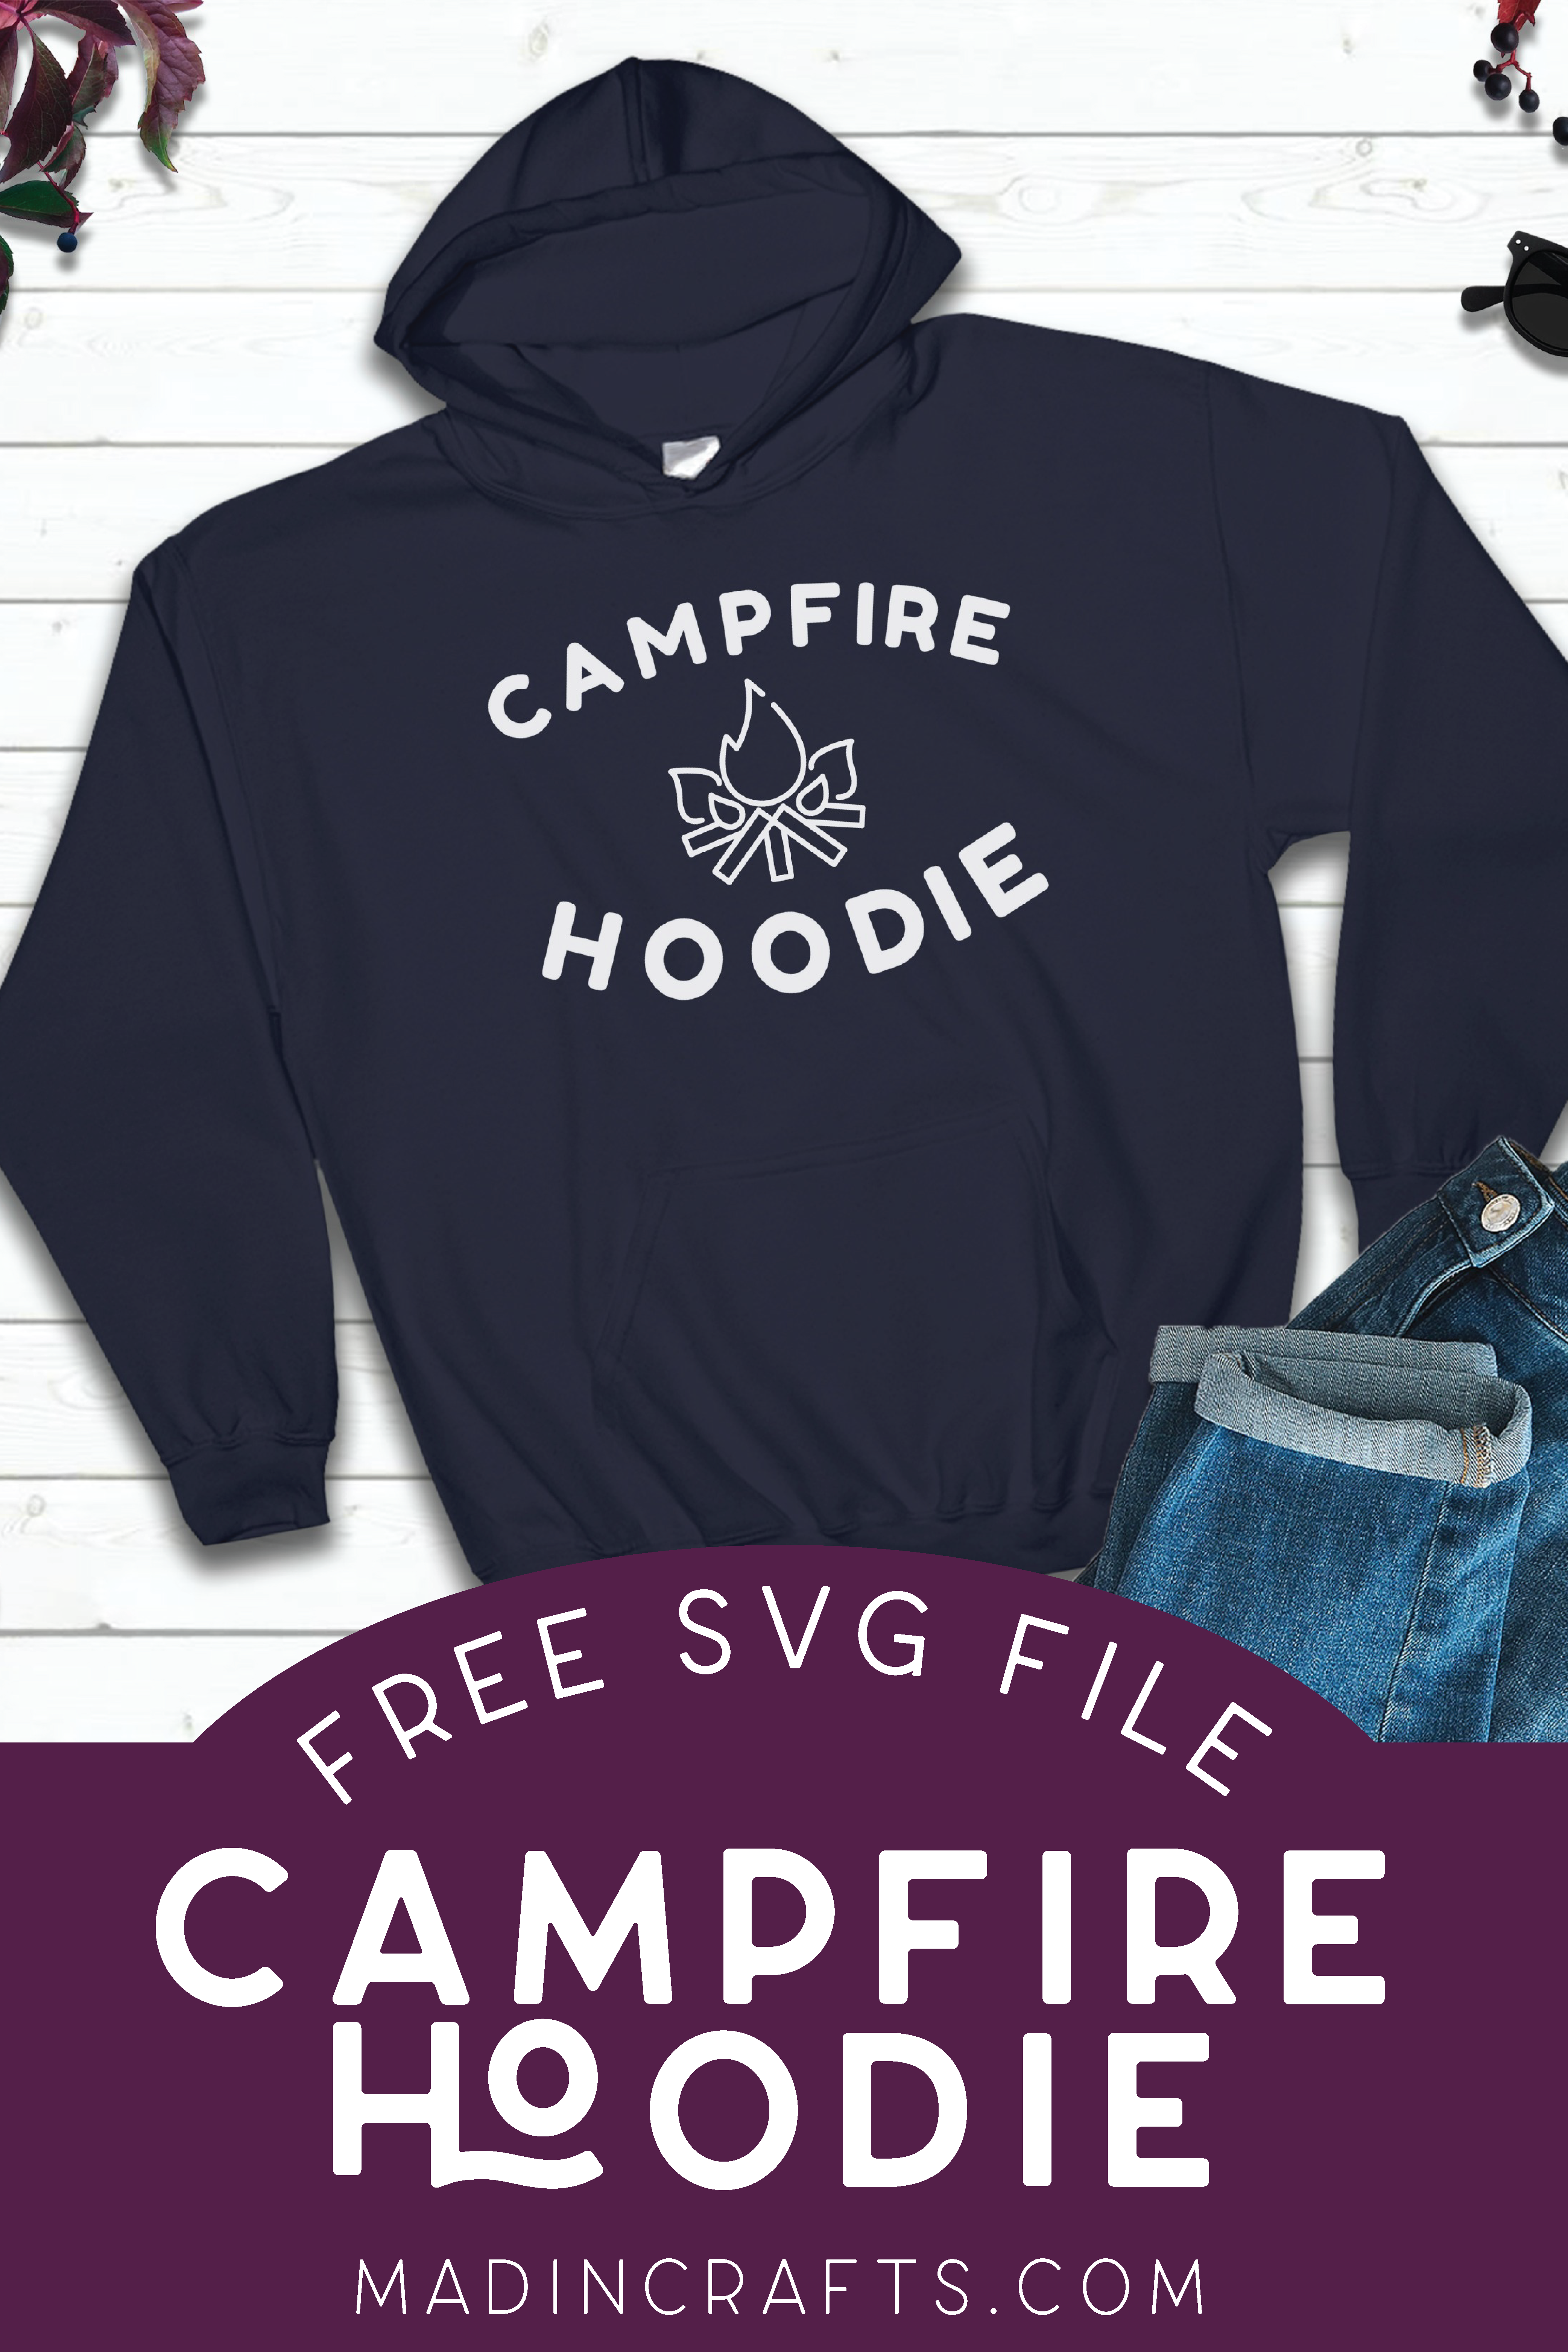 Navy blue sweatshire with Campfire Hoodie SVG design